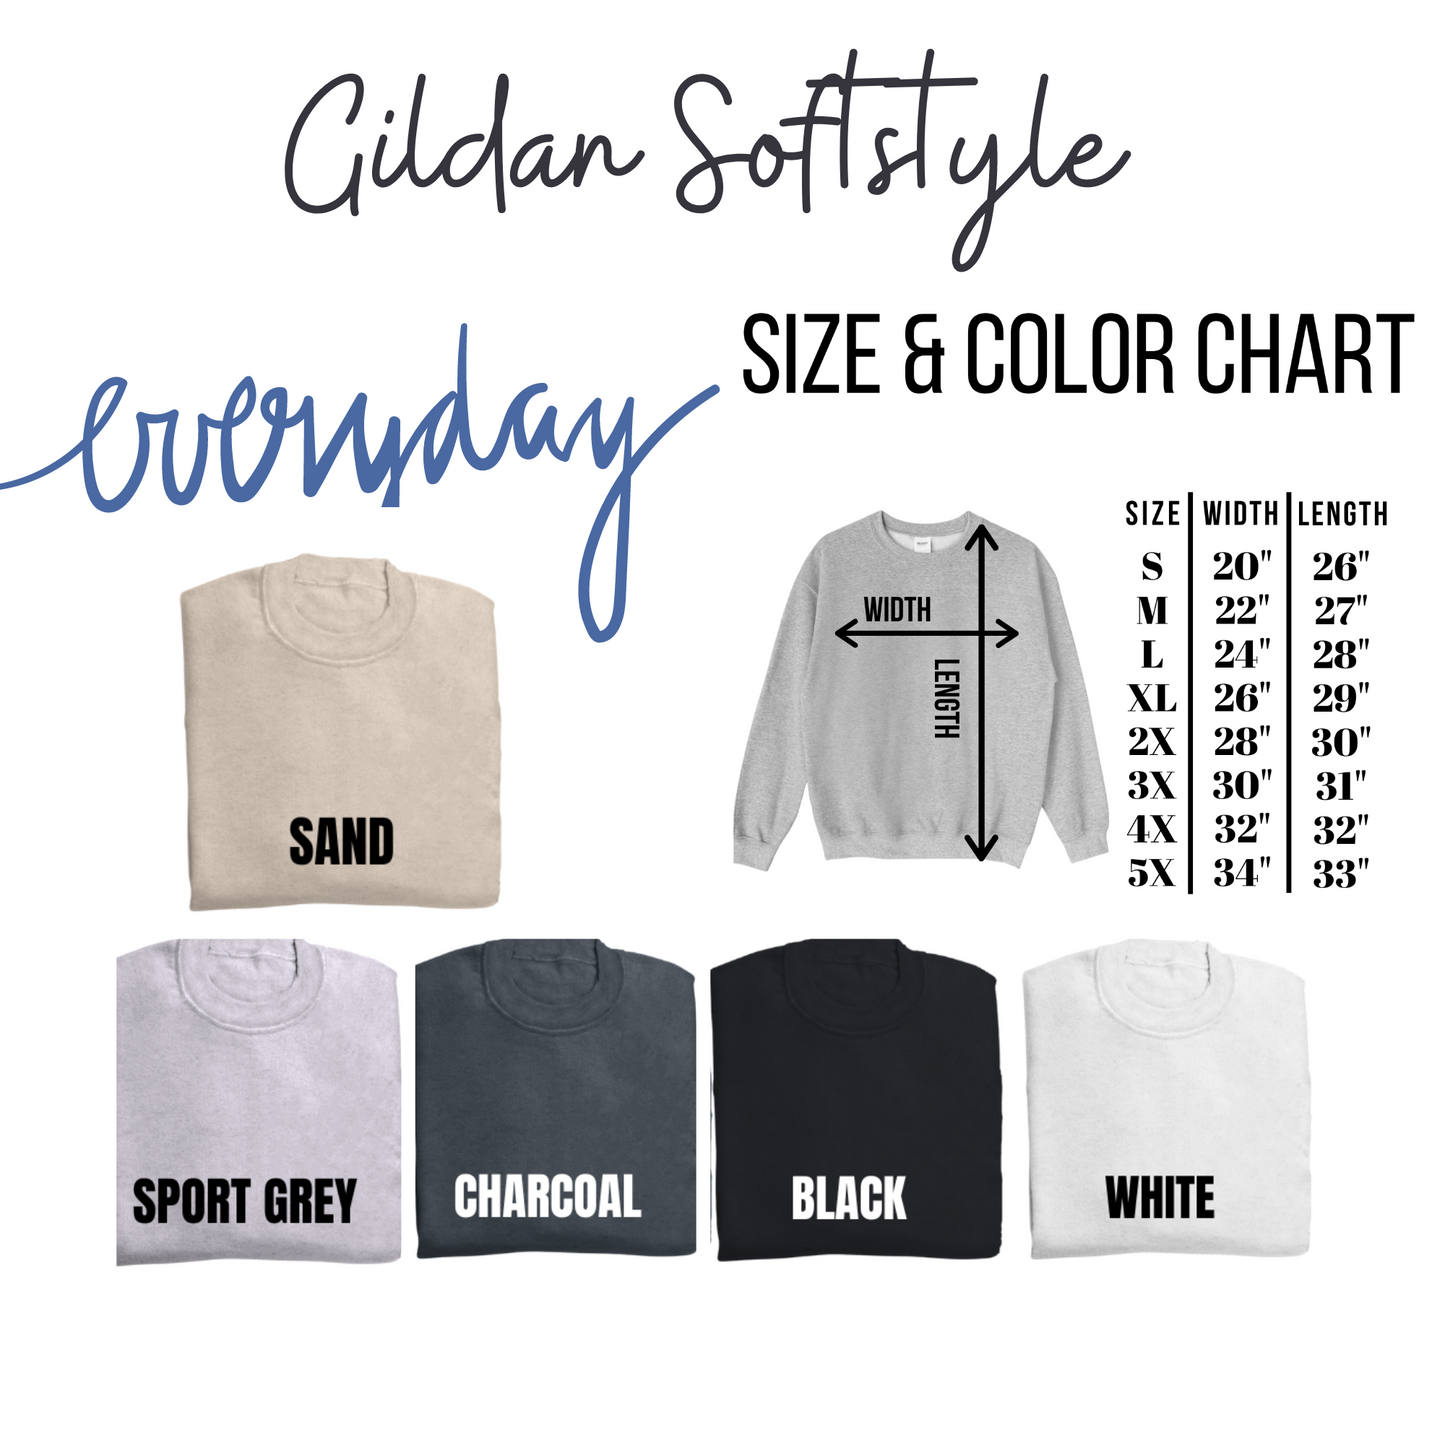 Sequin Effect Grinch Face Gildan Softstyle T-shirt or Sweatshirt